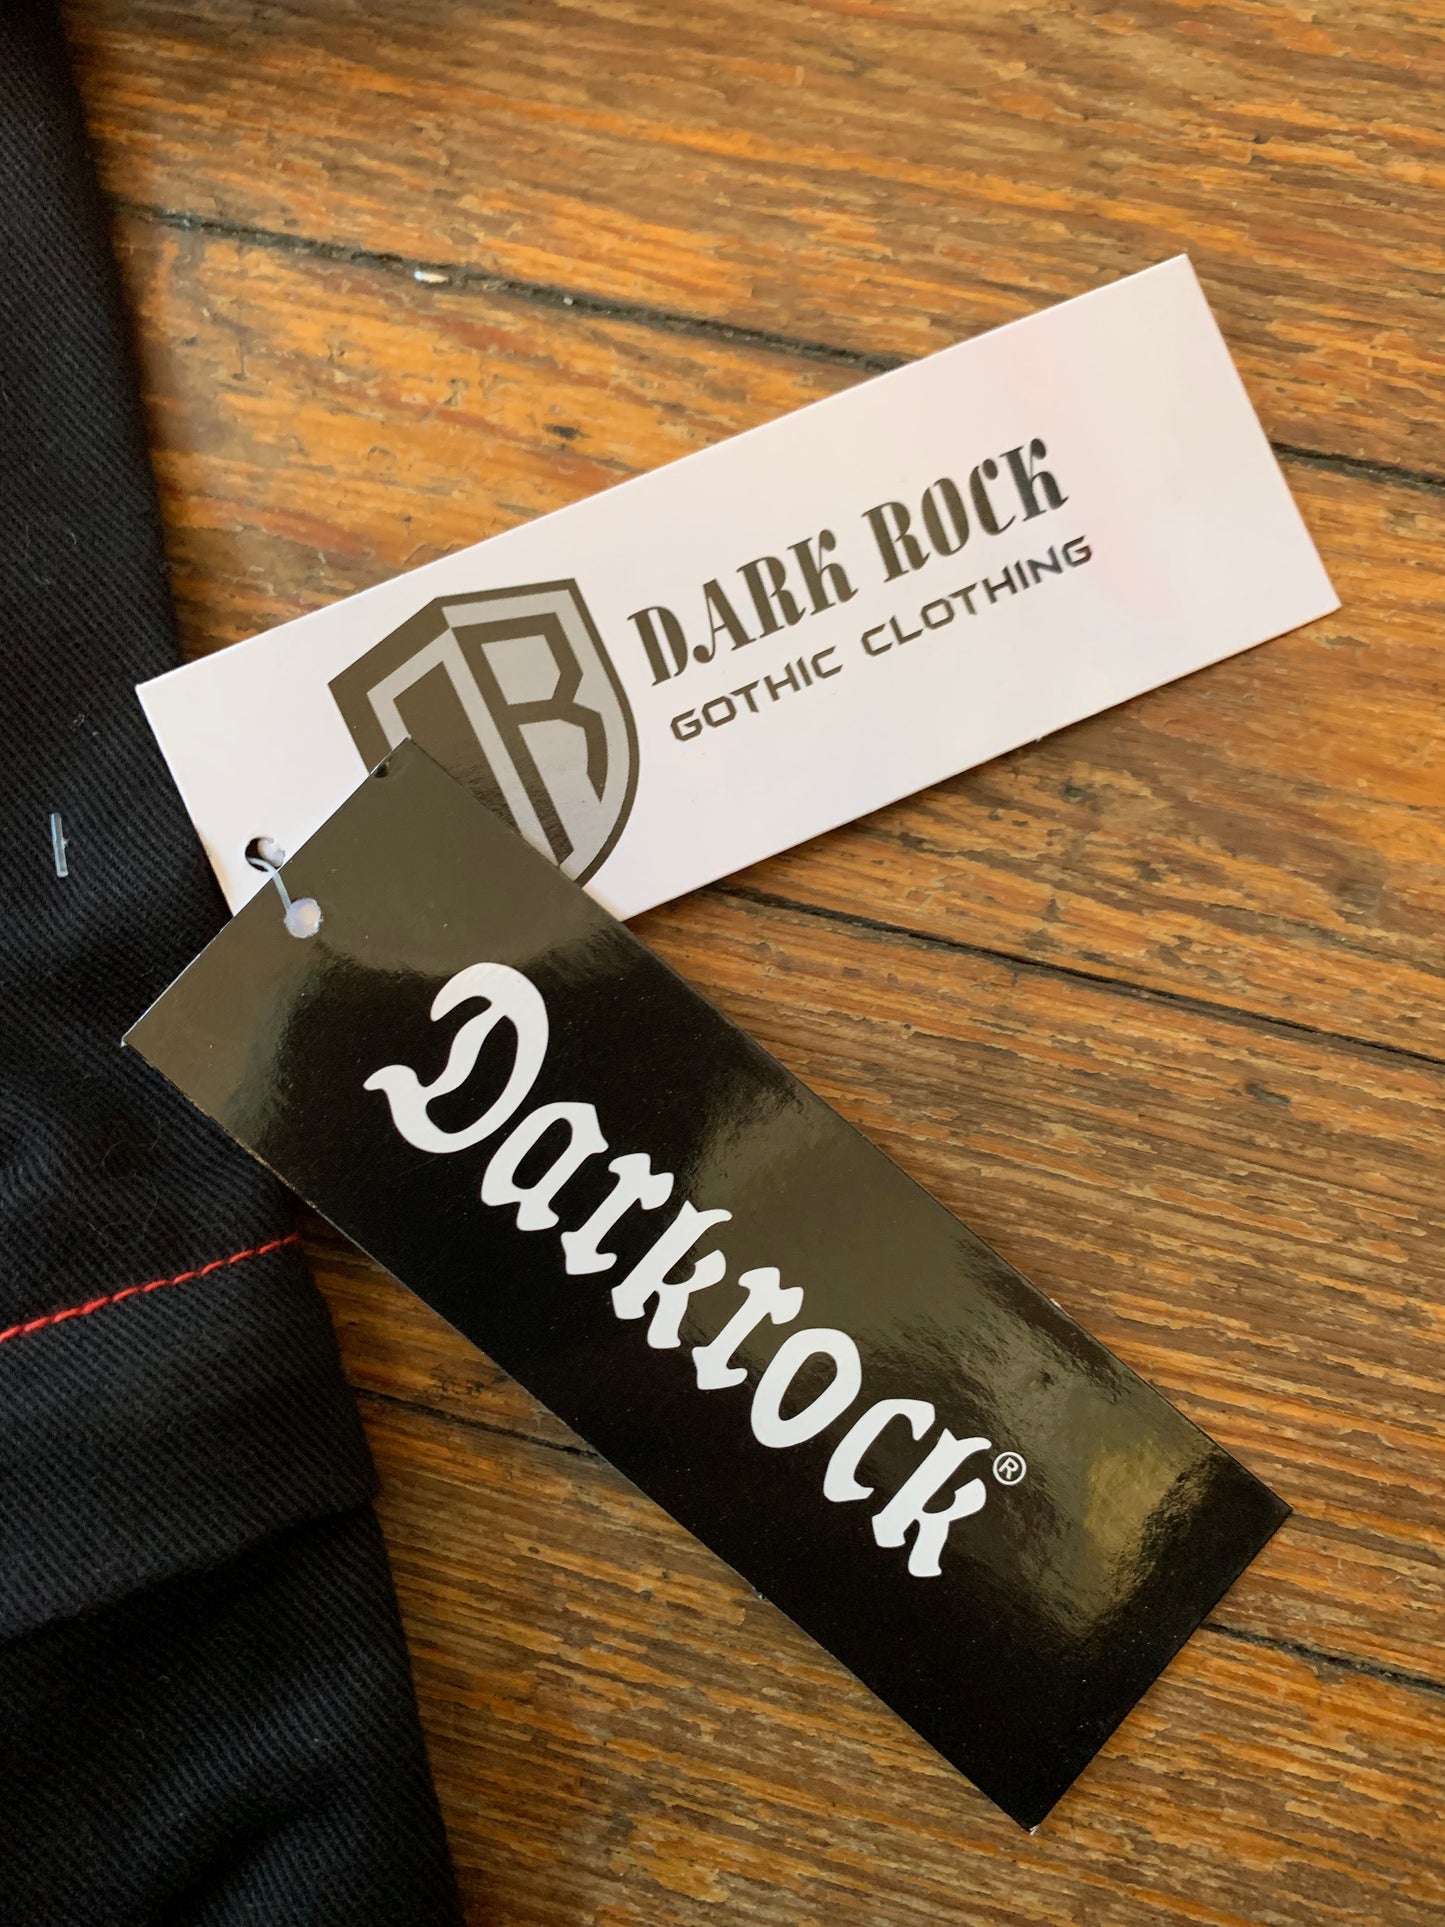 NWOT Dark Rock Black & Red Gothic Bondage Chain Pants